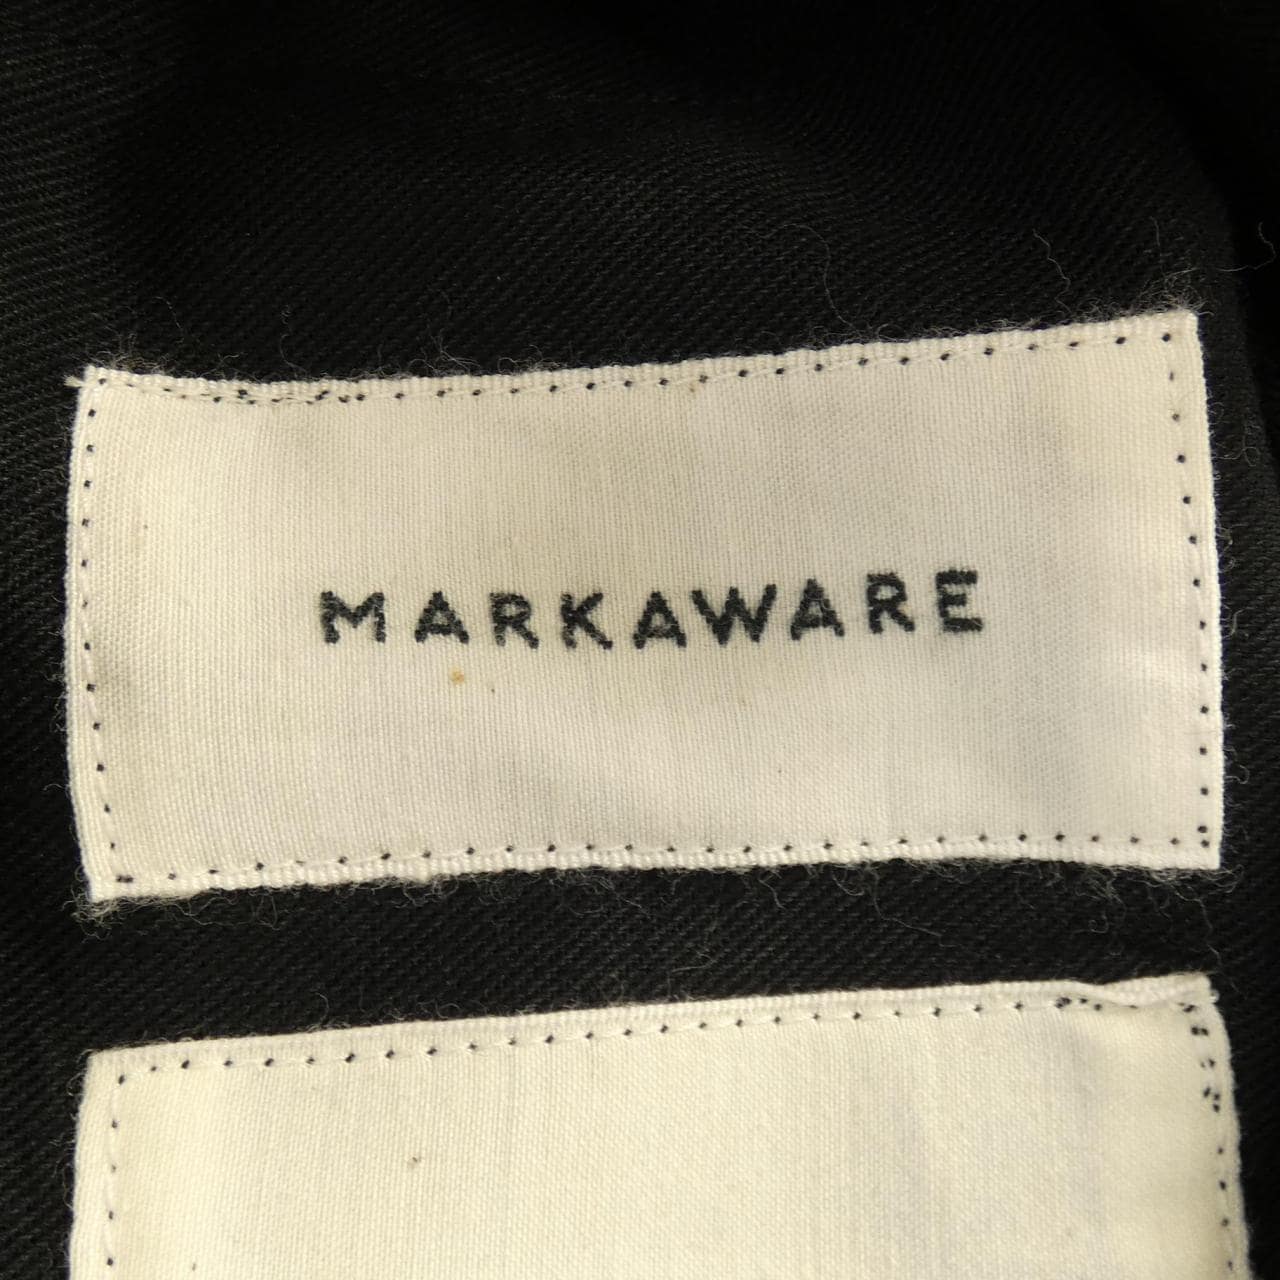 Markware MARKAWARE pants